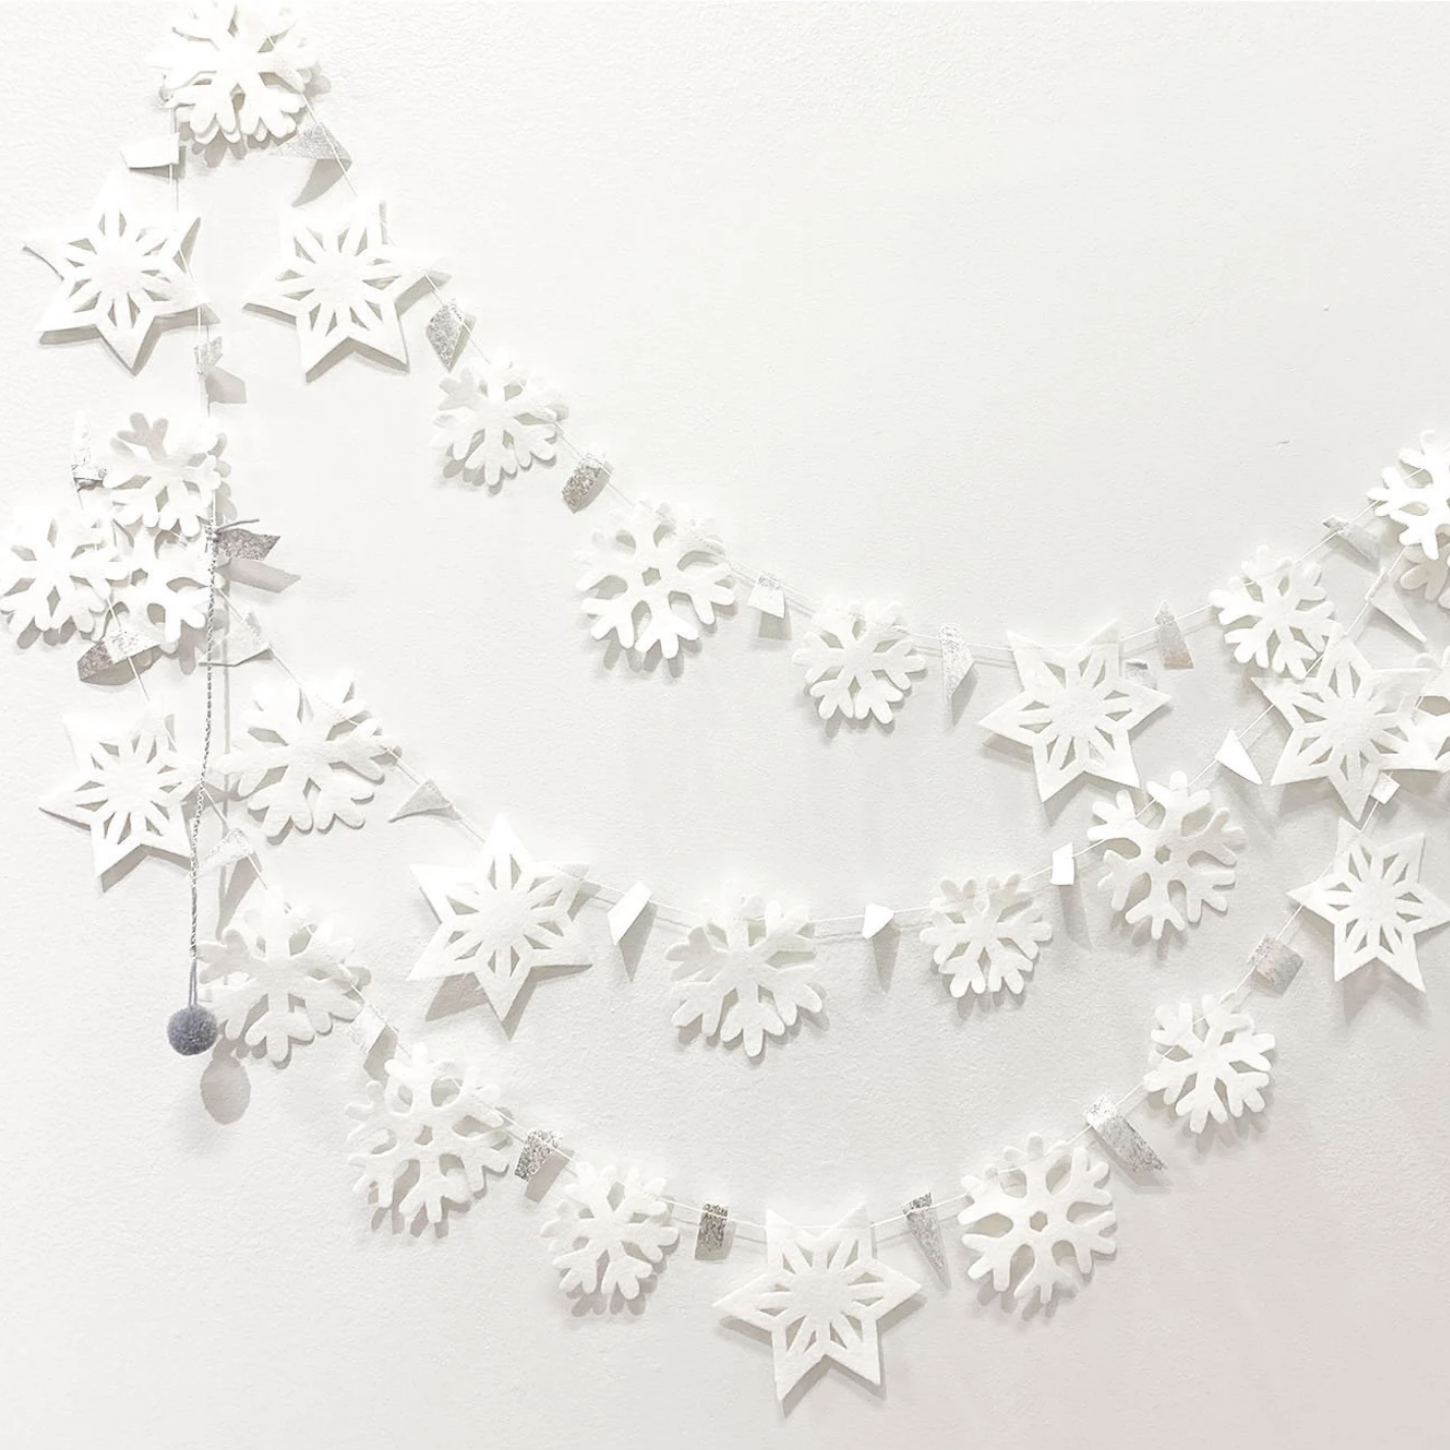 snowflake garland